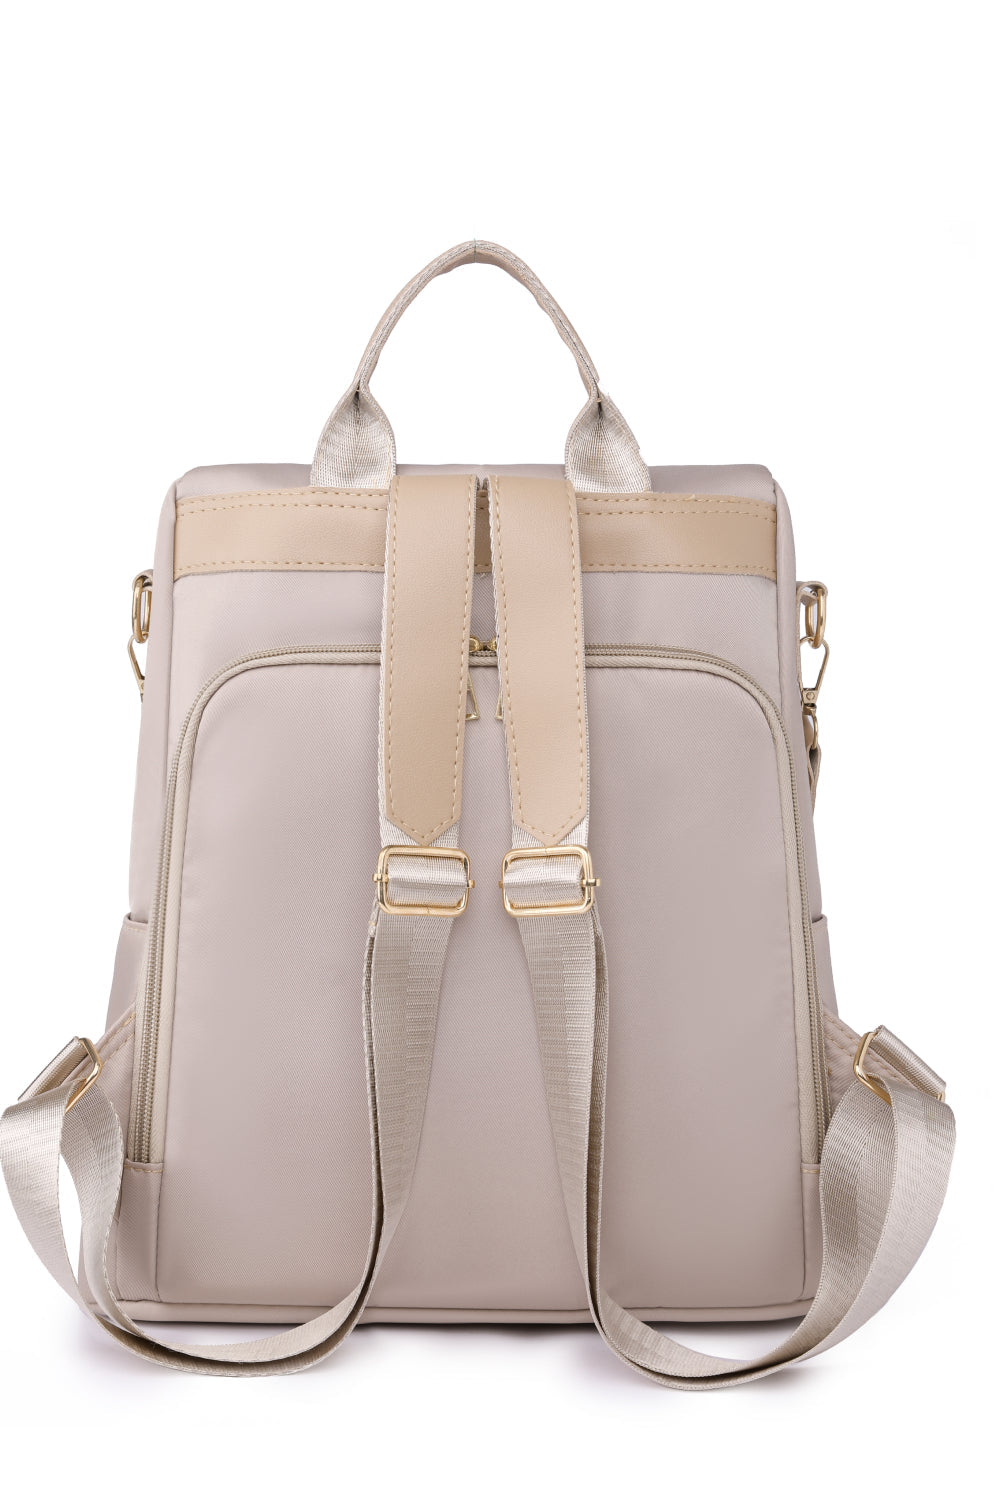 Zipper Pocket Beaded Backpack One Size by Trendsi | BlingxAddict